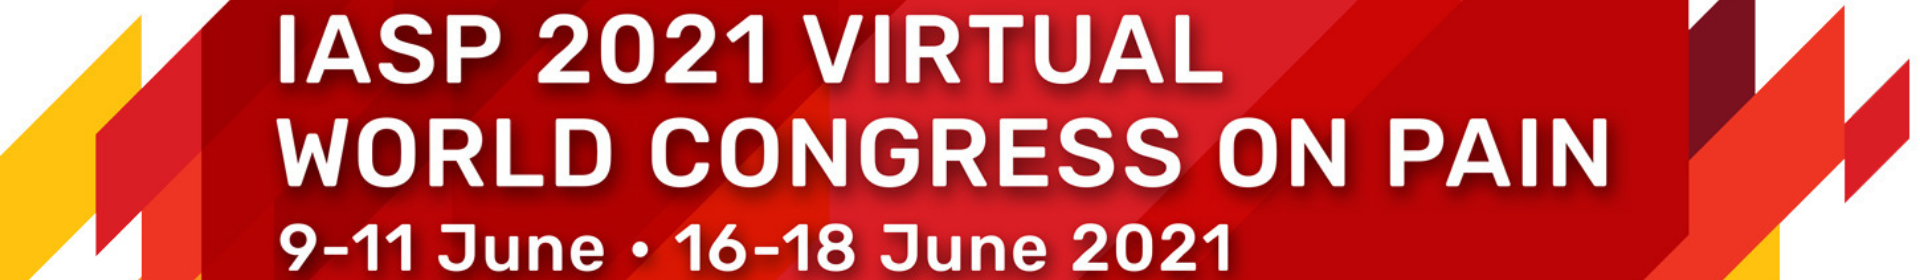 2021 IASP Virtual World Congress on Pain Event Banner